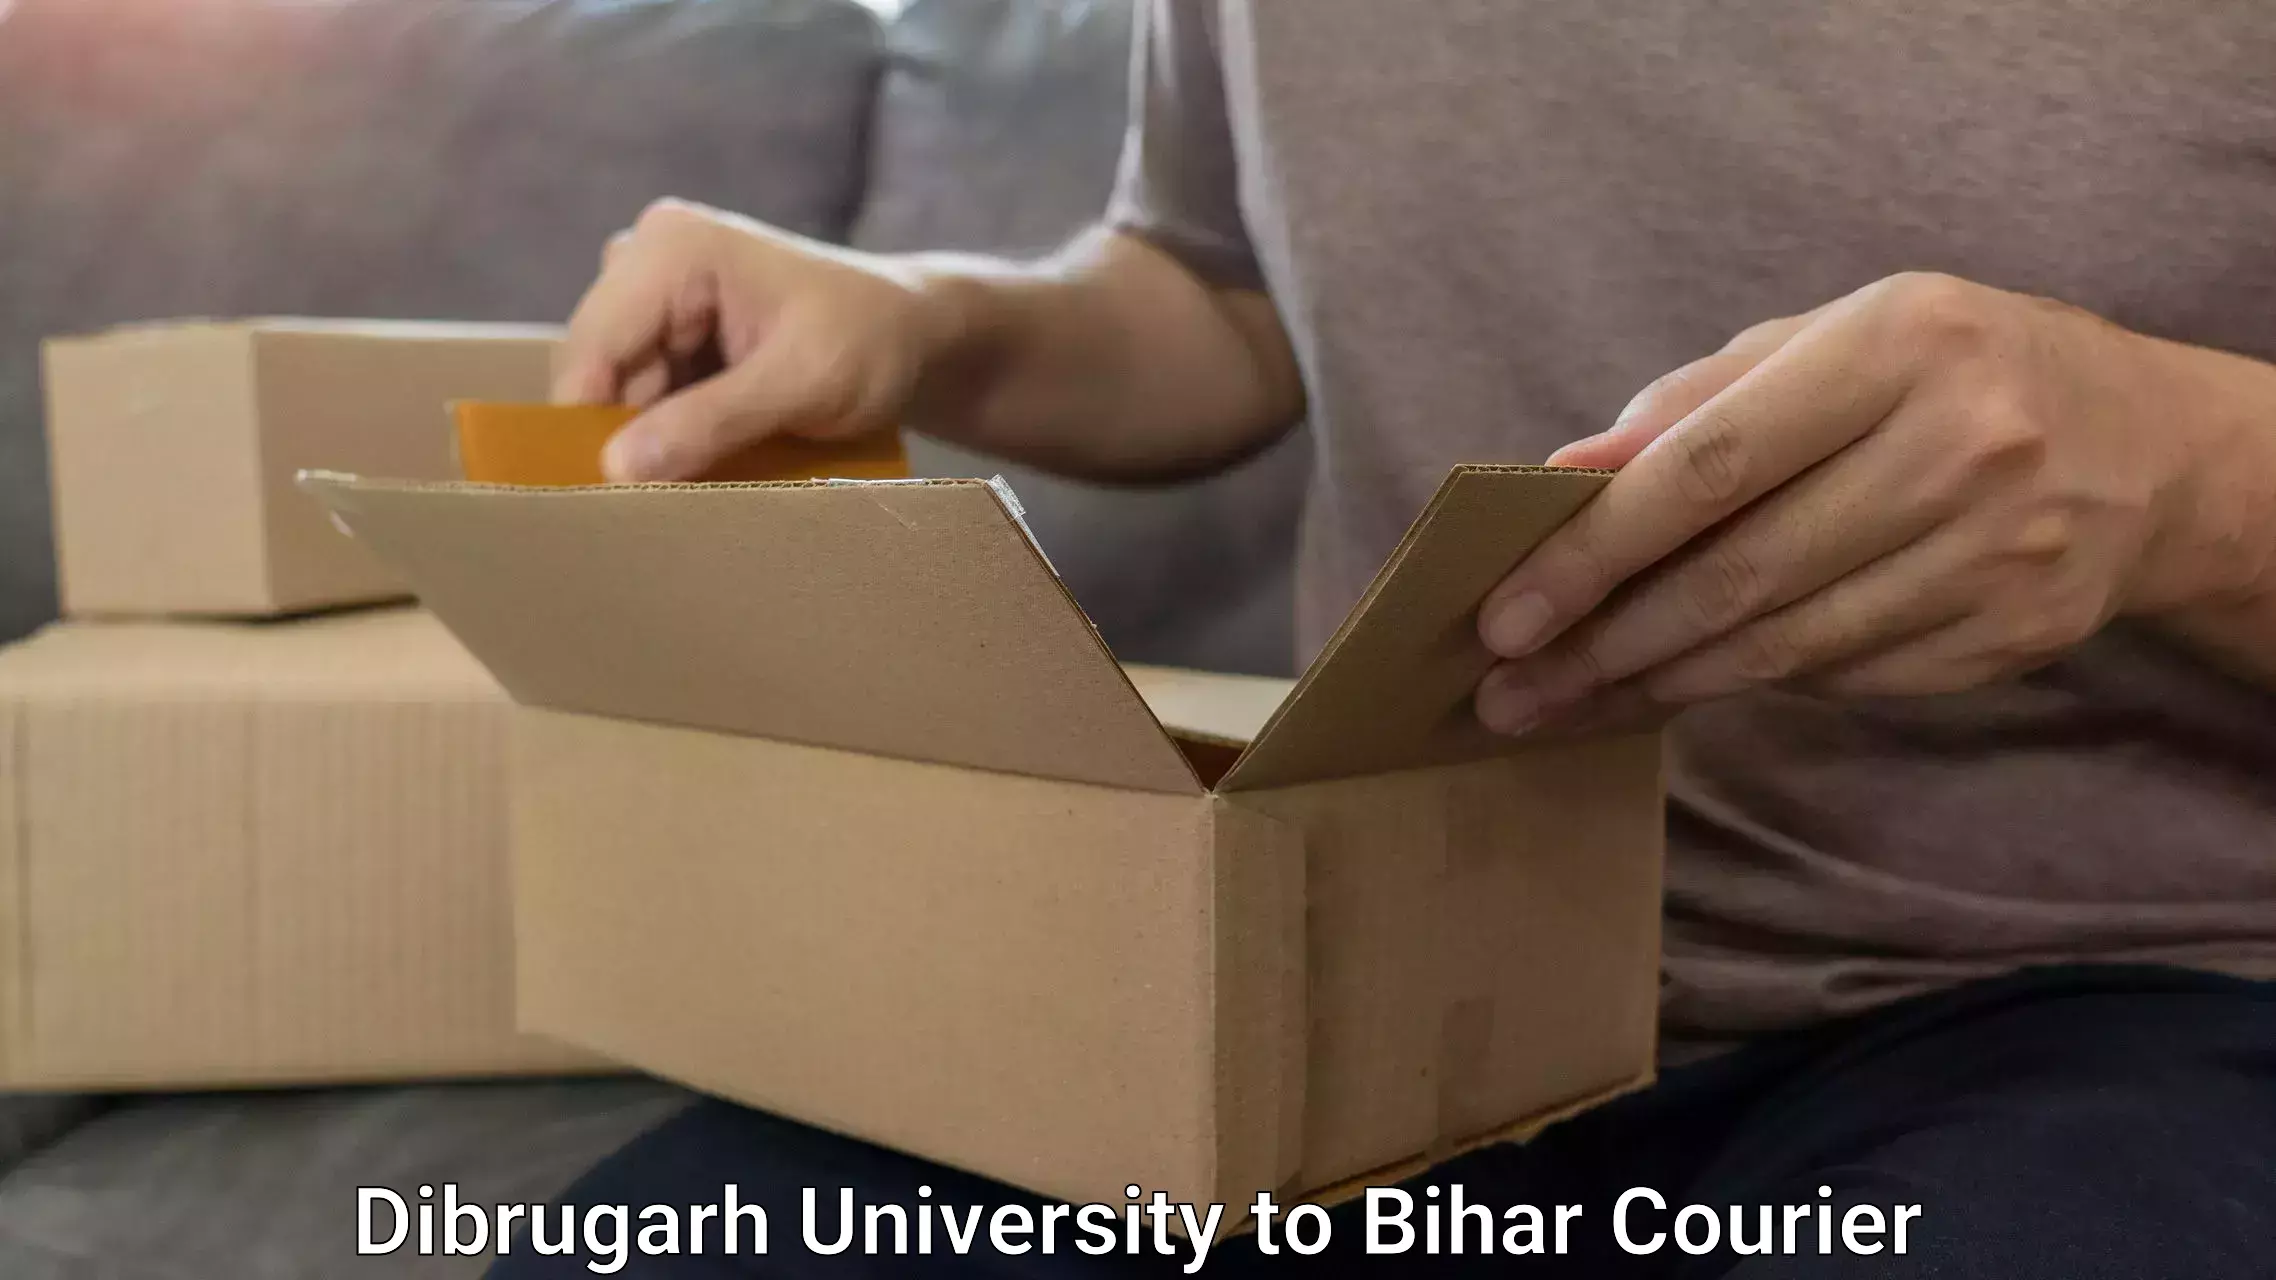 Luggage transfer service Dibrugarh University to Begusarai